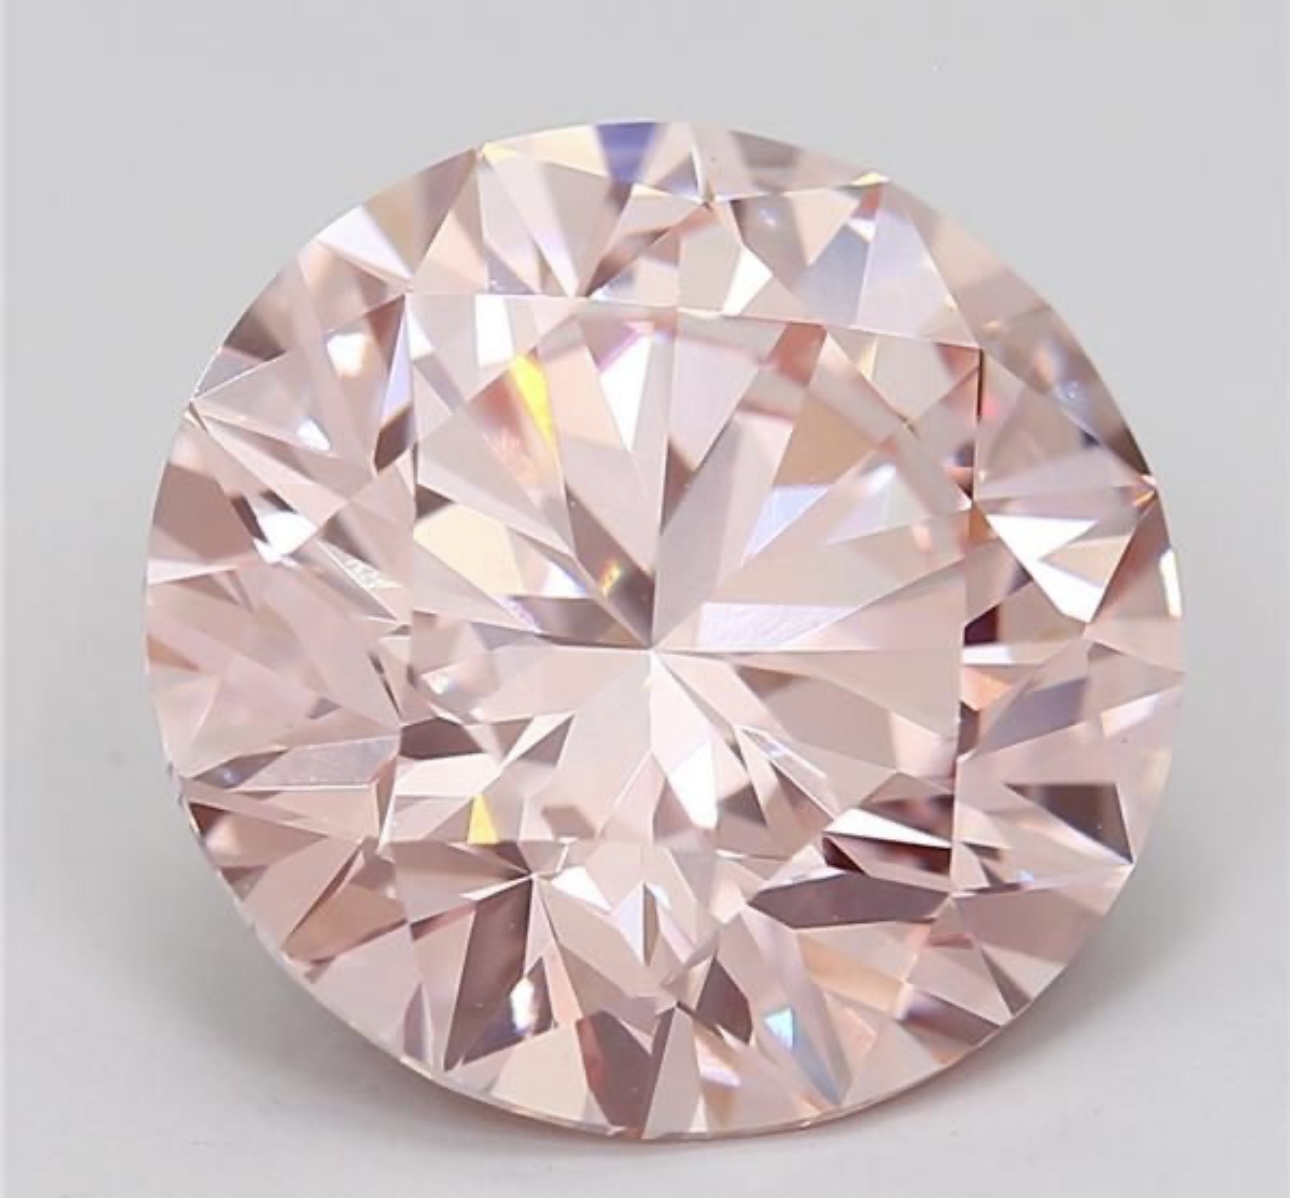 Round Brilliant Cut Diamond 7.42 Carat Fancy Pink Colour VS1 Clarity - IGI Certificate - Image 6 of 8